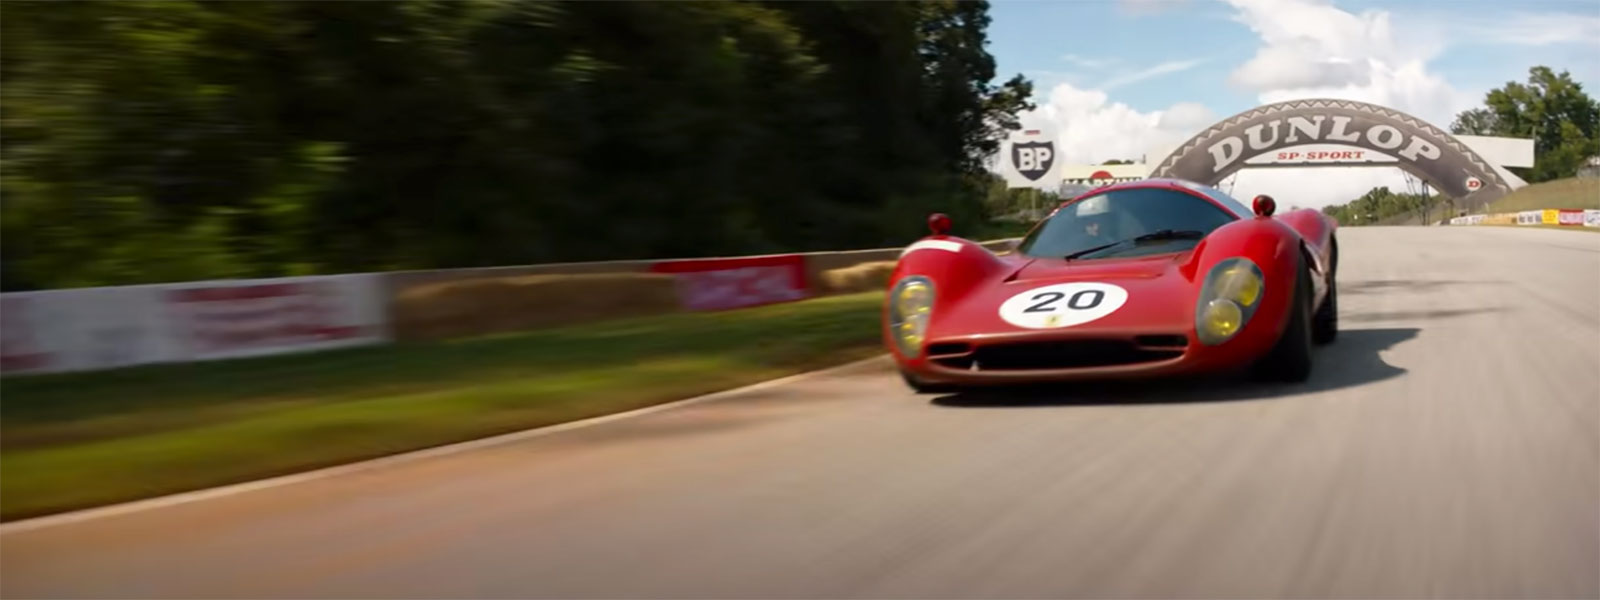 Still image from "Ford v. Ferrari" trailer